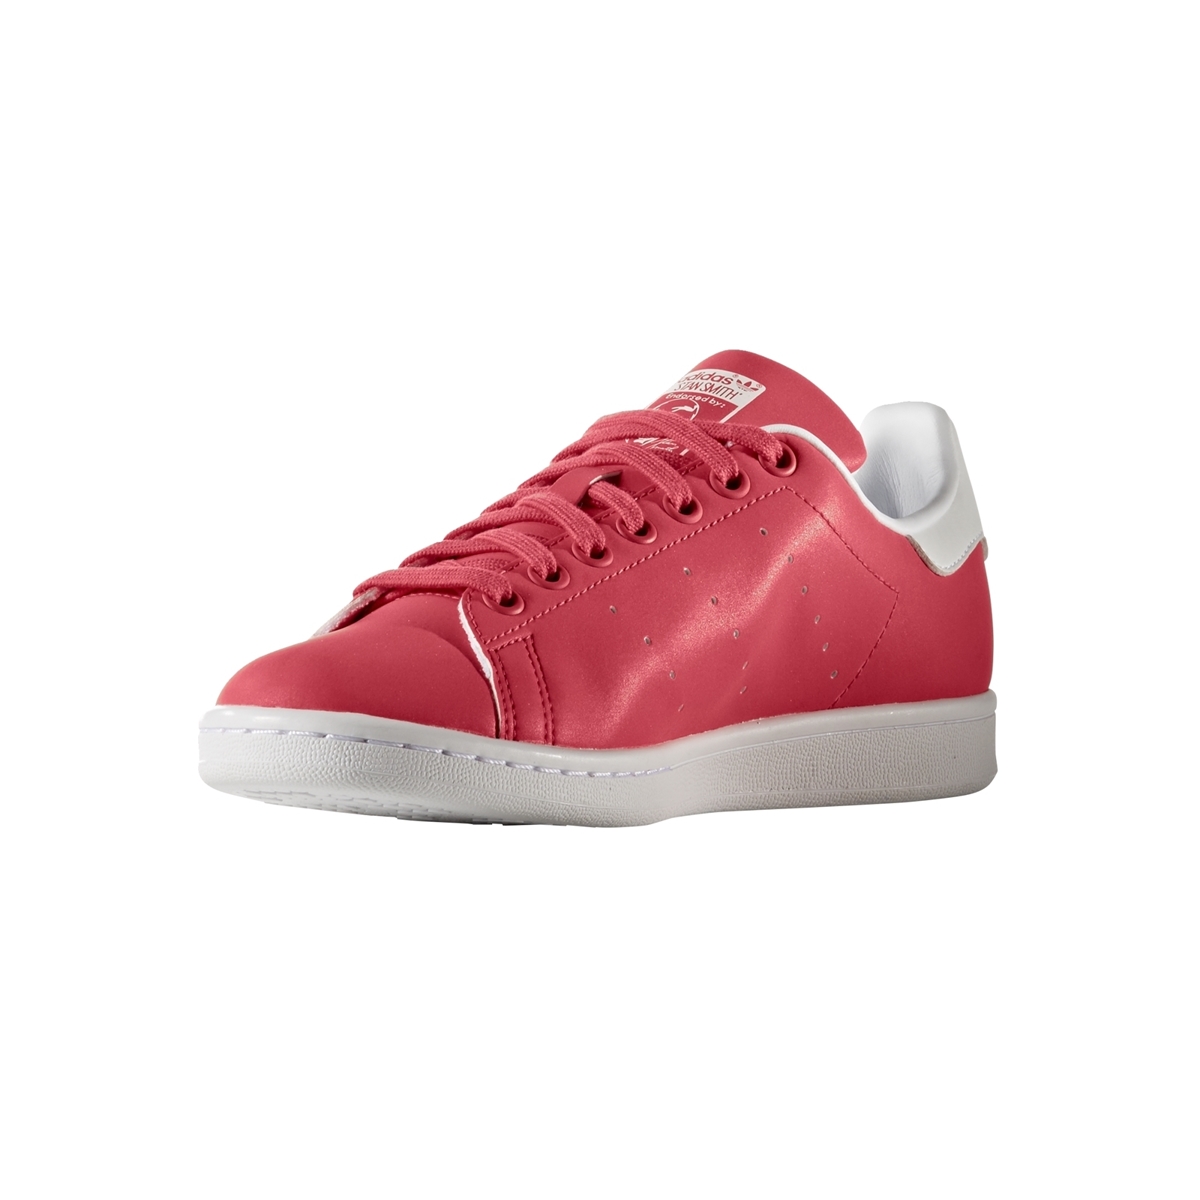 Adidas Stan Smith W " Reflective" (Pink/Footwear